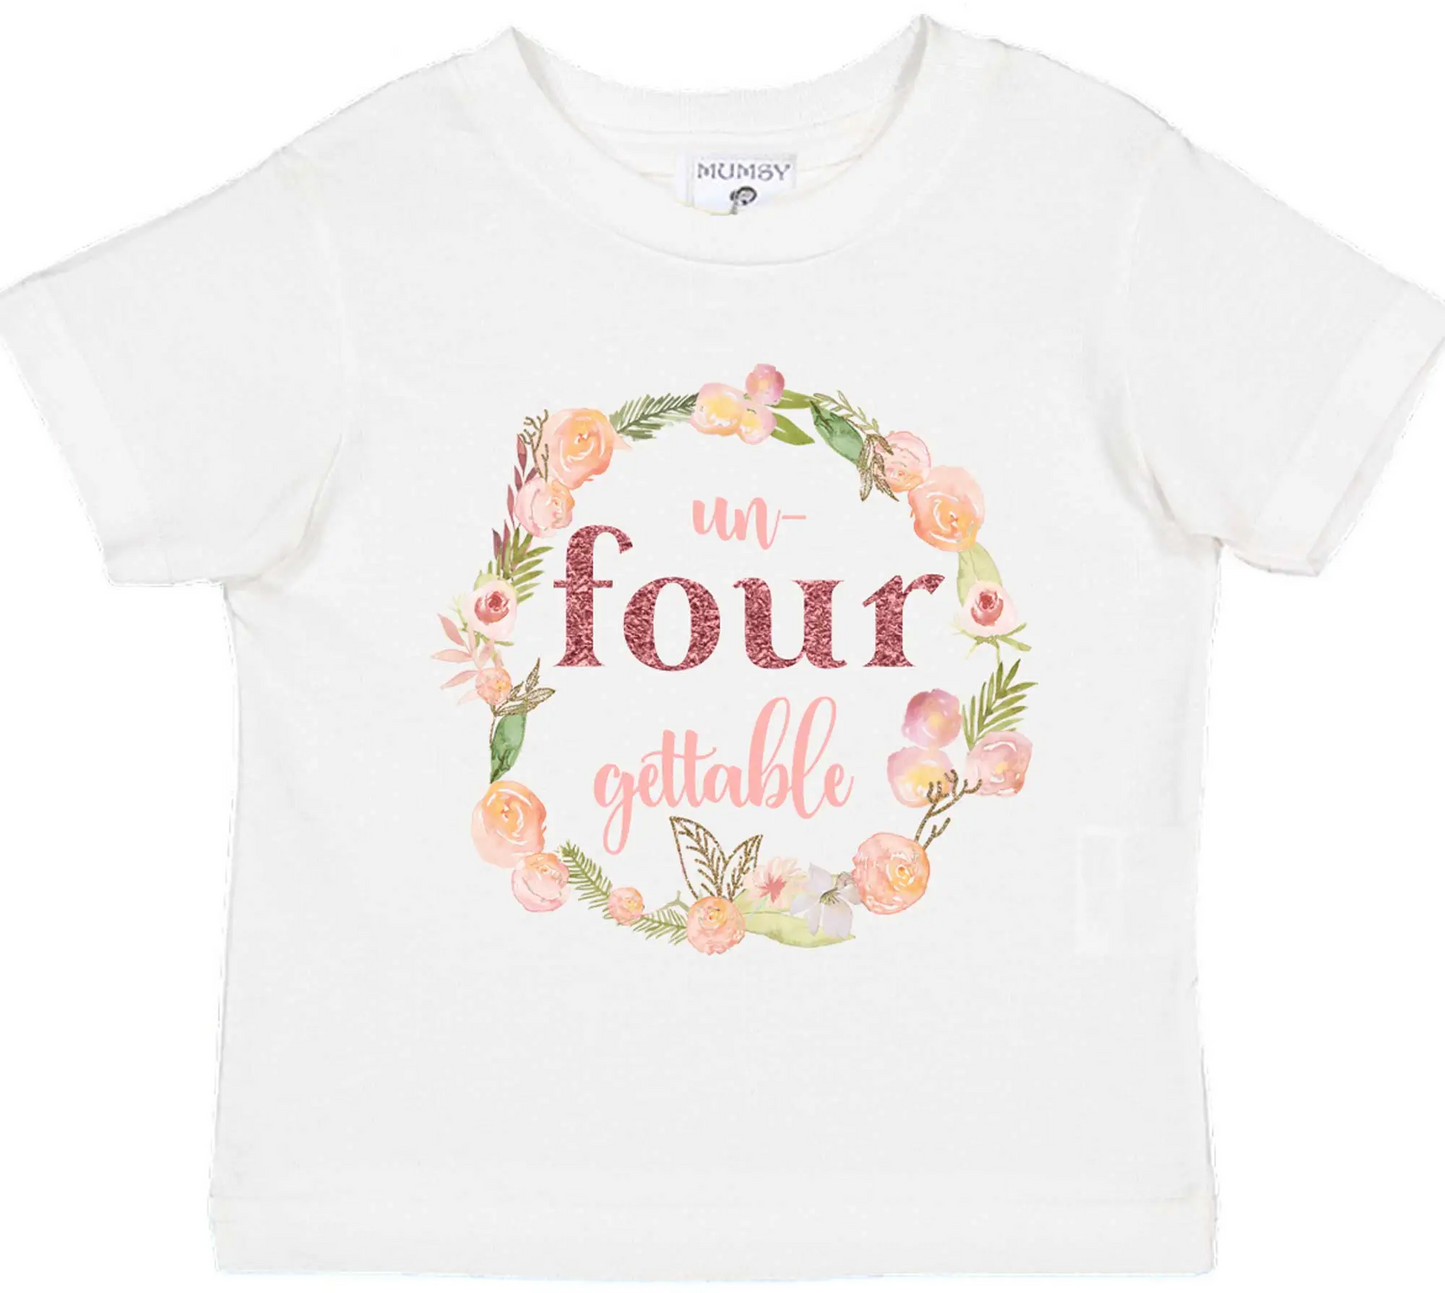 "Un-FOUR-gettable" Girls 4th Birthday Shirt